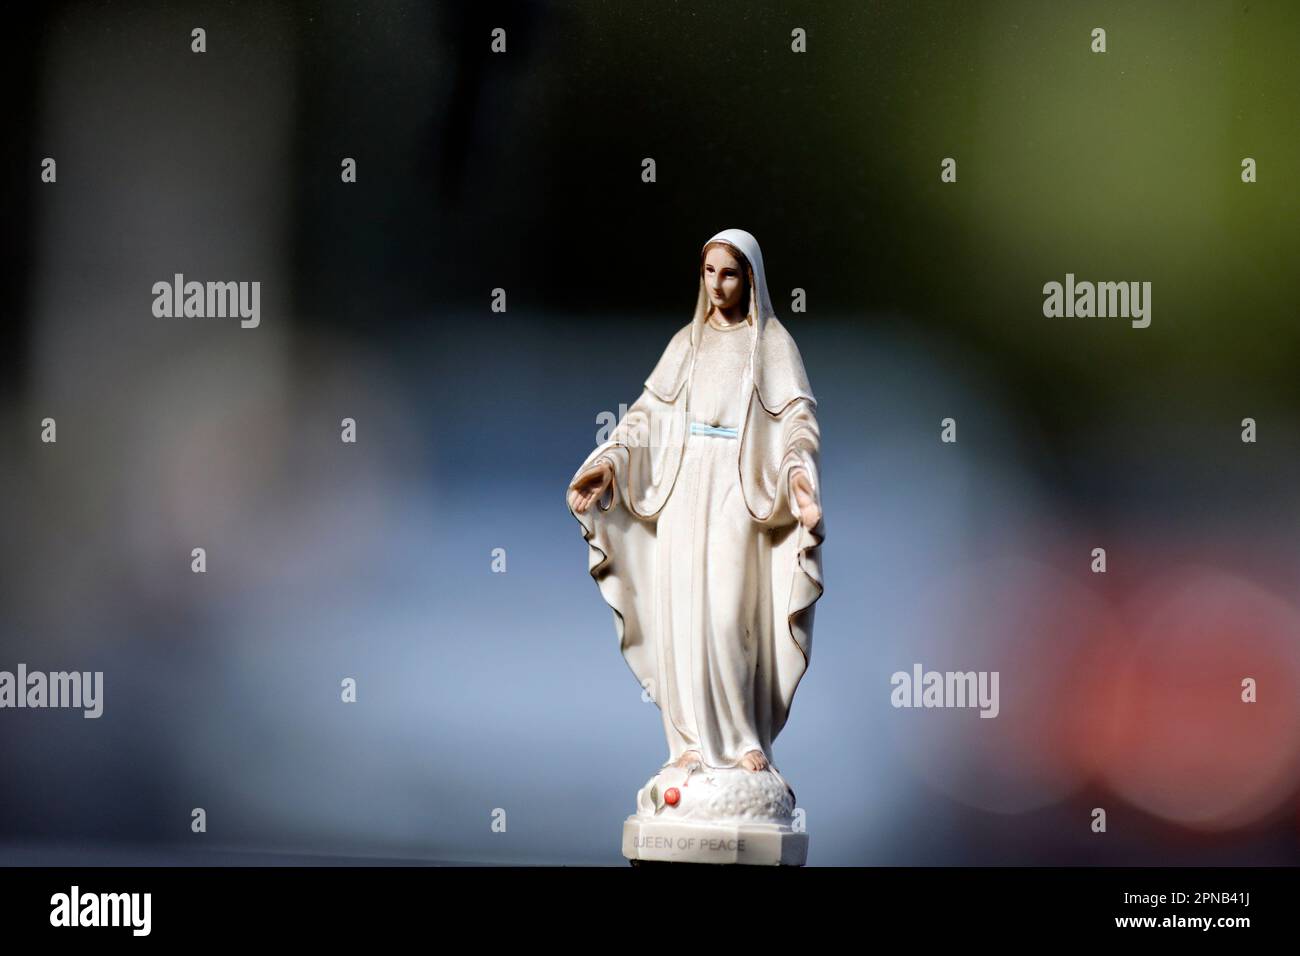 Virgin Mary figurine in a car. Ho Chi Minh City. Vietnam. Stock Photo